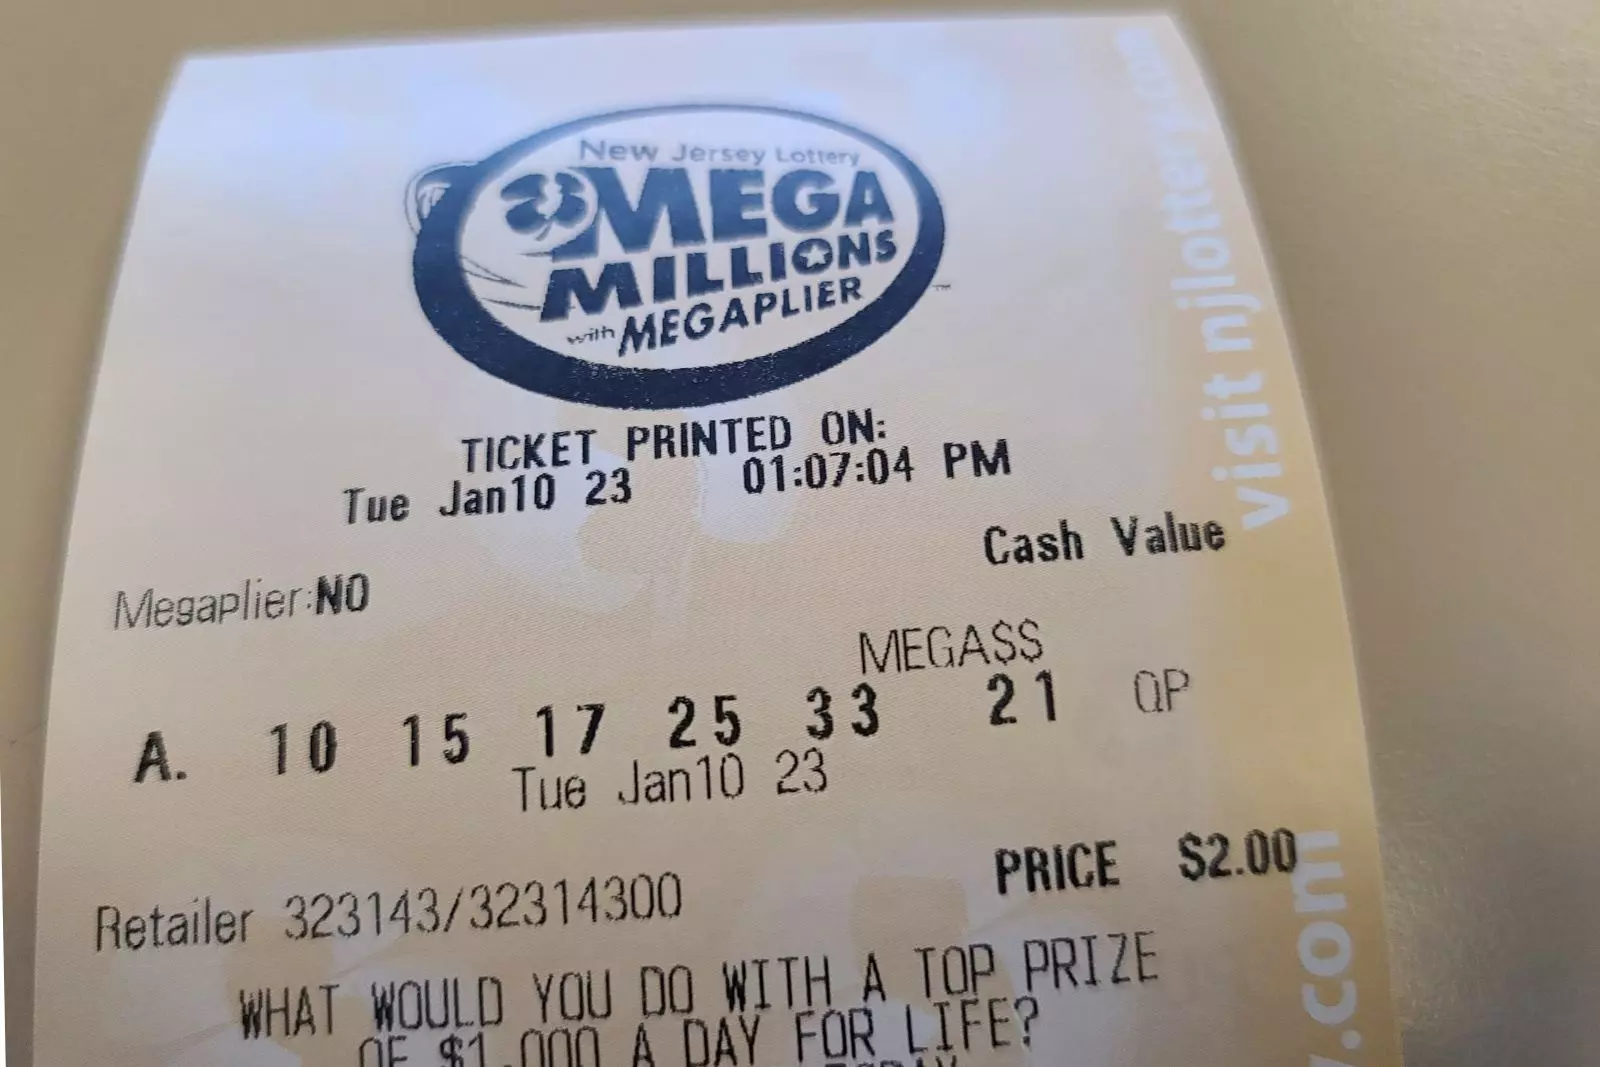 Powerball jackpot climbs to $1.9 billion, 1 Florida ticket won $1M